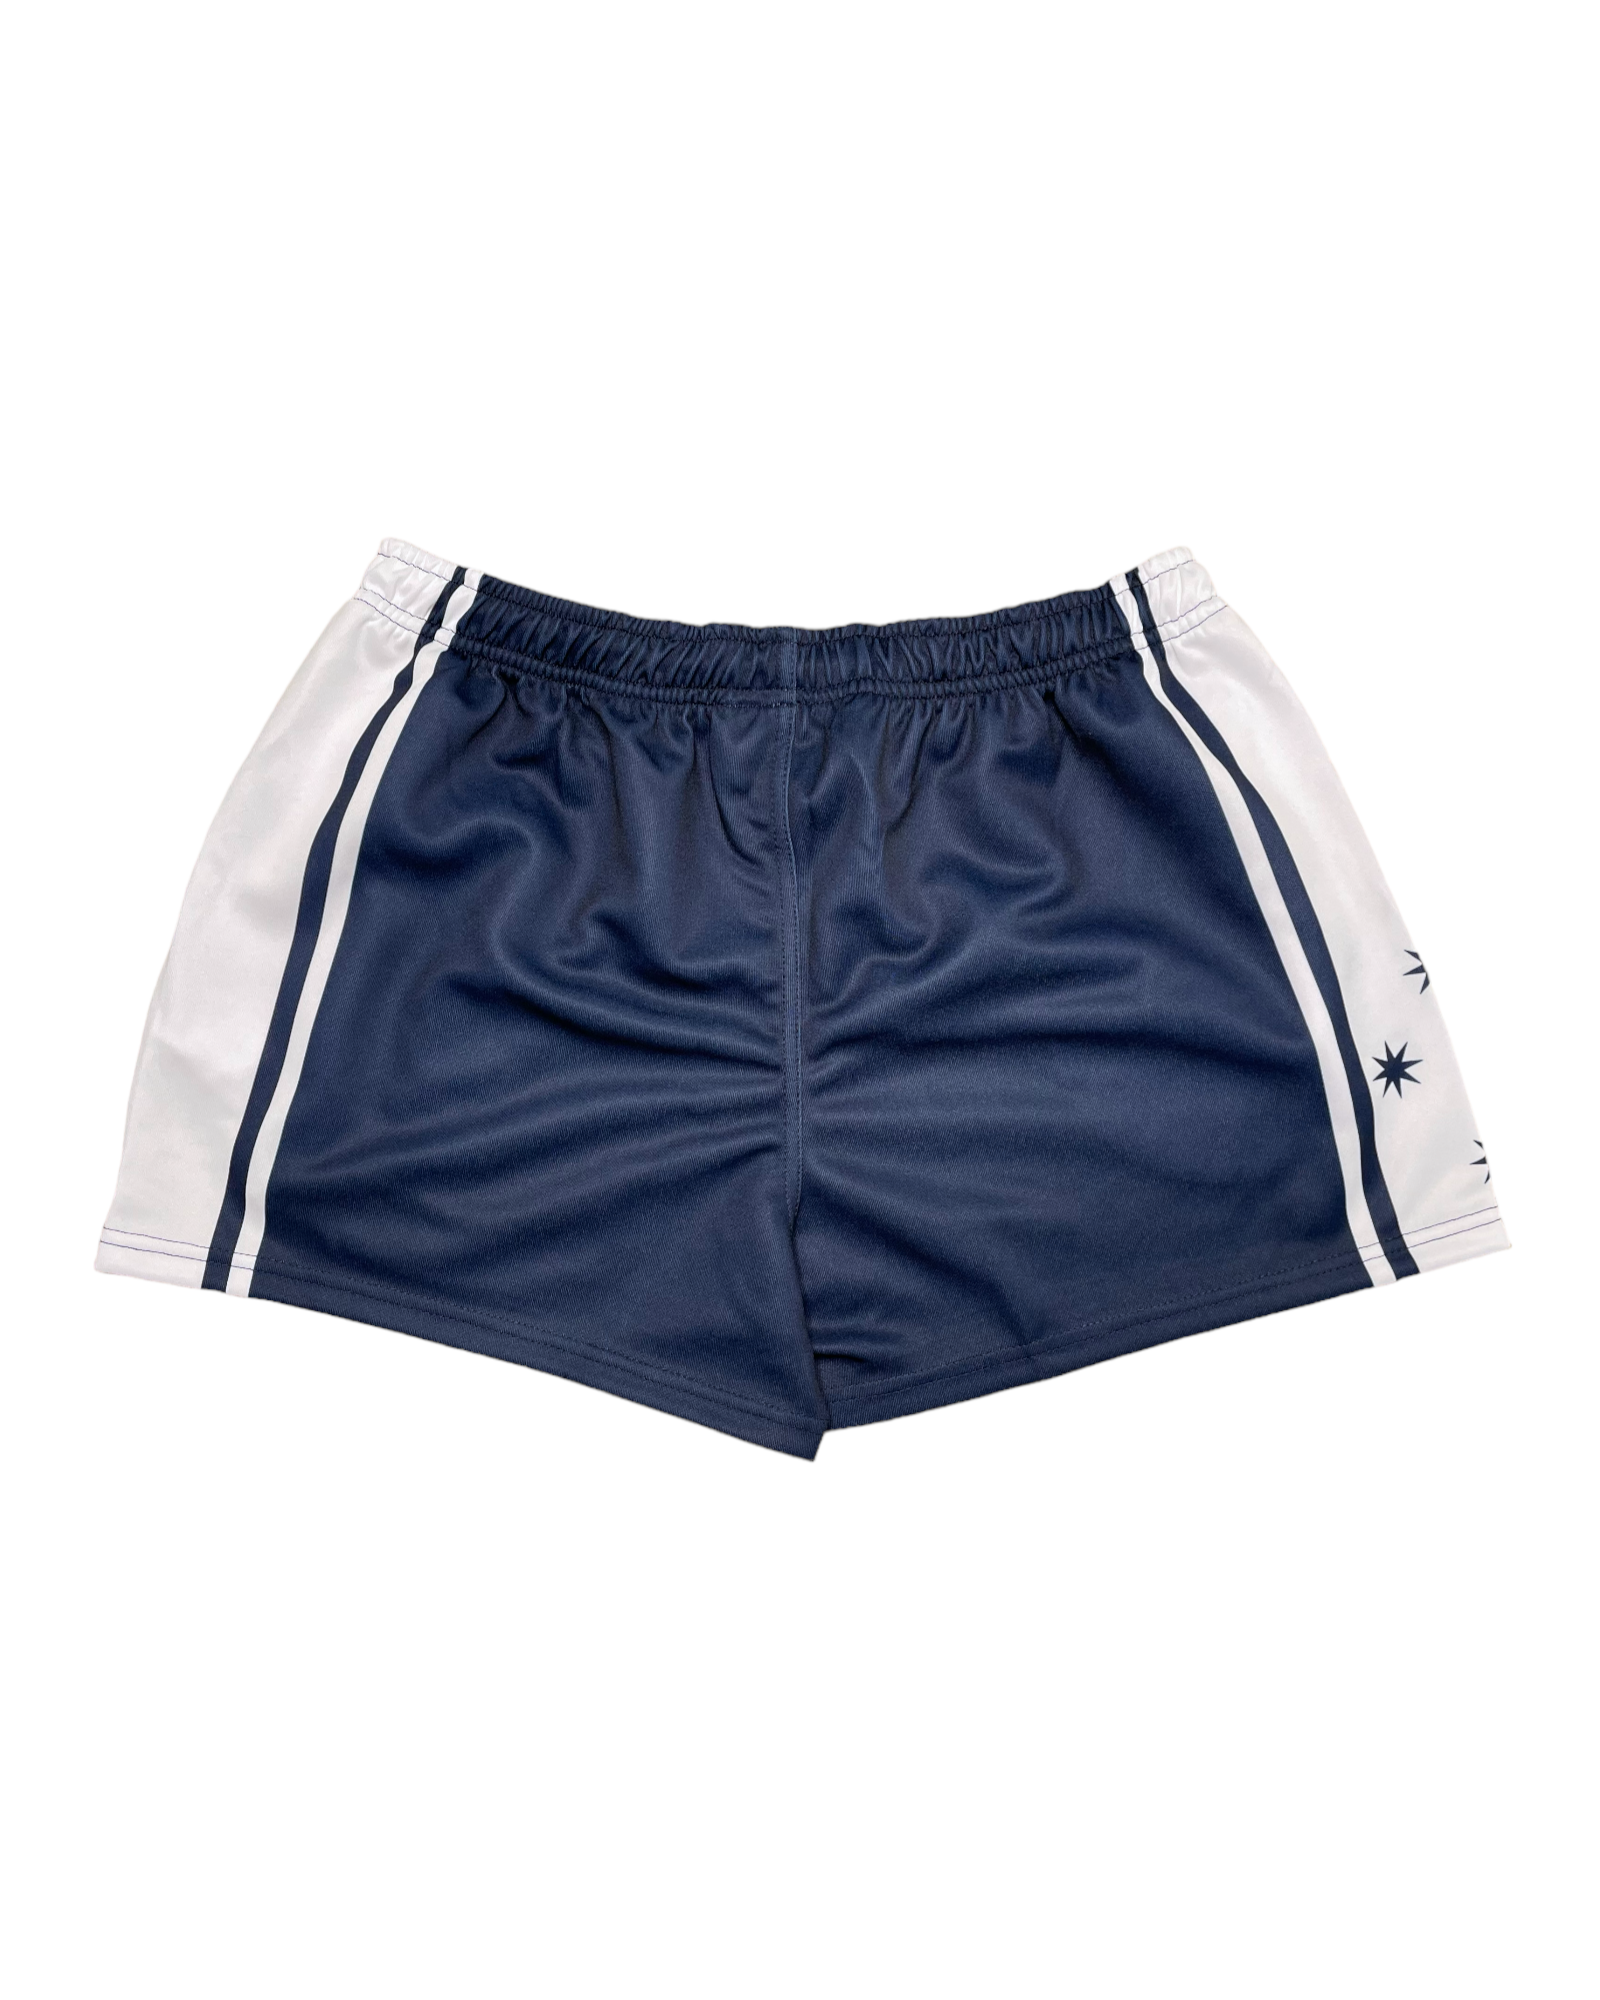 Kids | Footy Shorts | Heritage | Navy